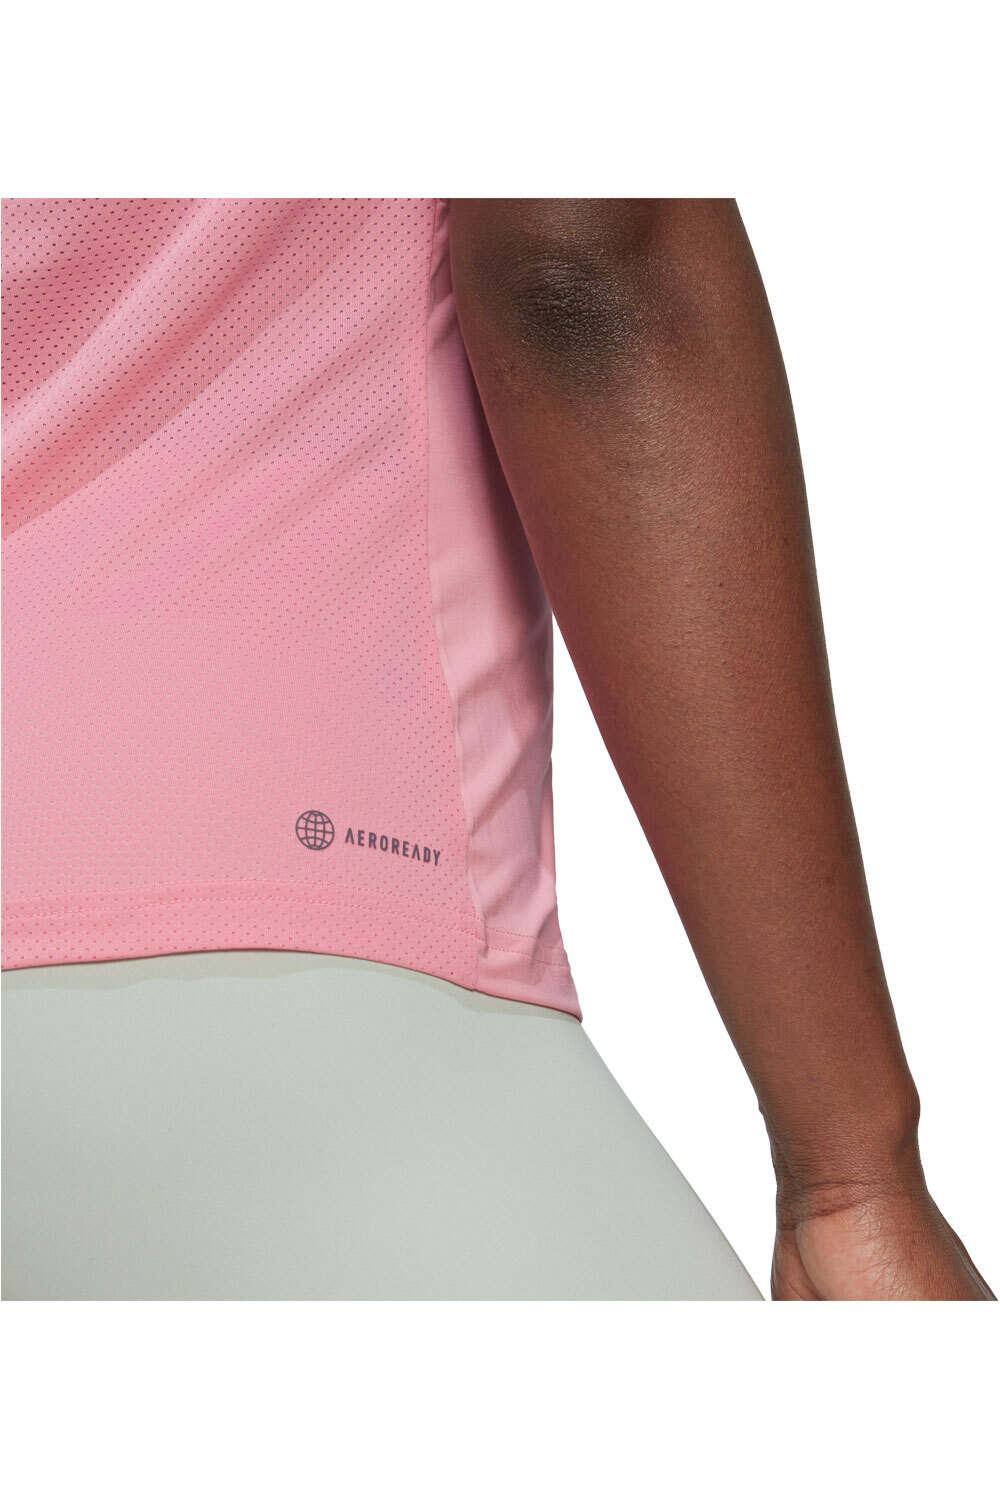 adidas camiseta tirantes fitness mujer HIIT vista detalle